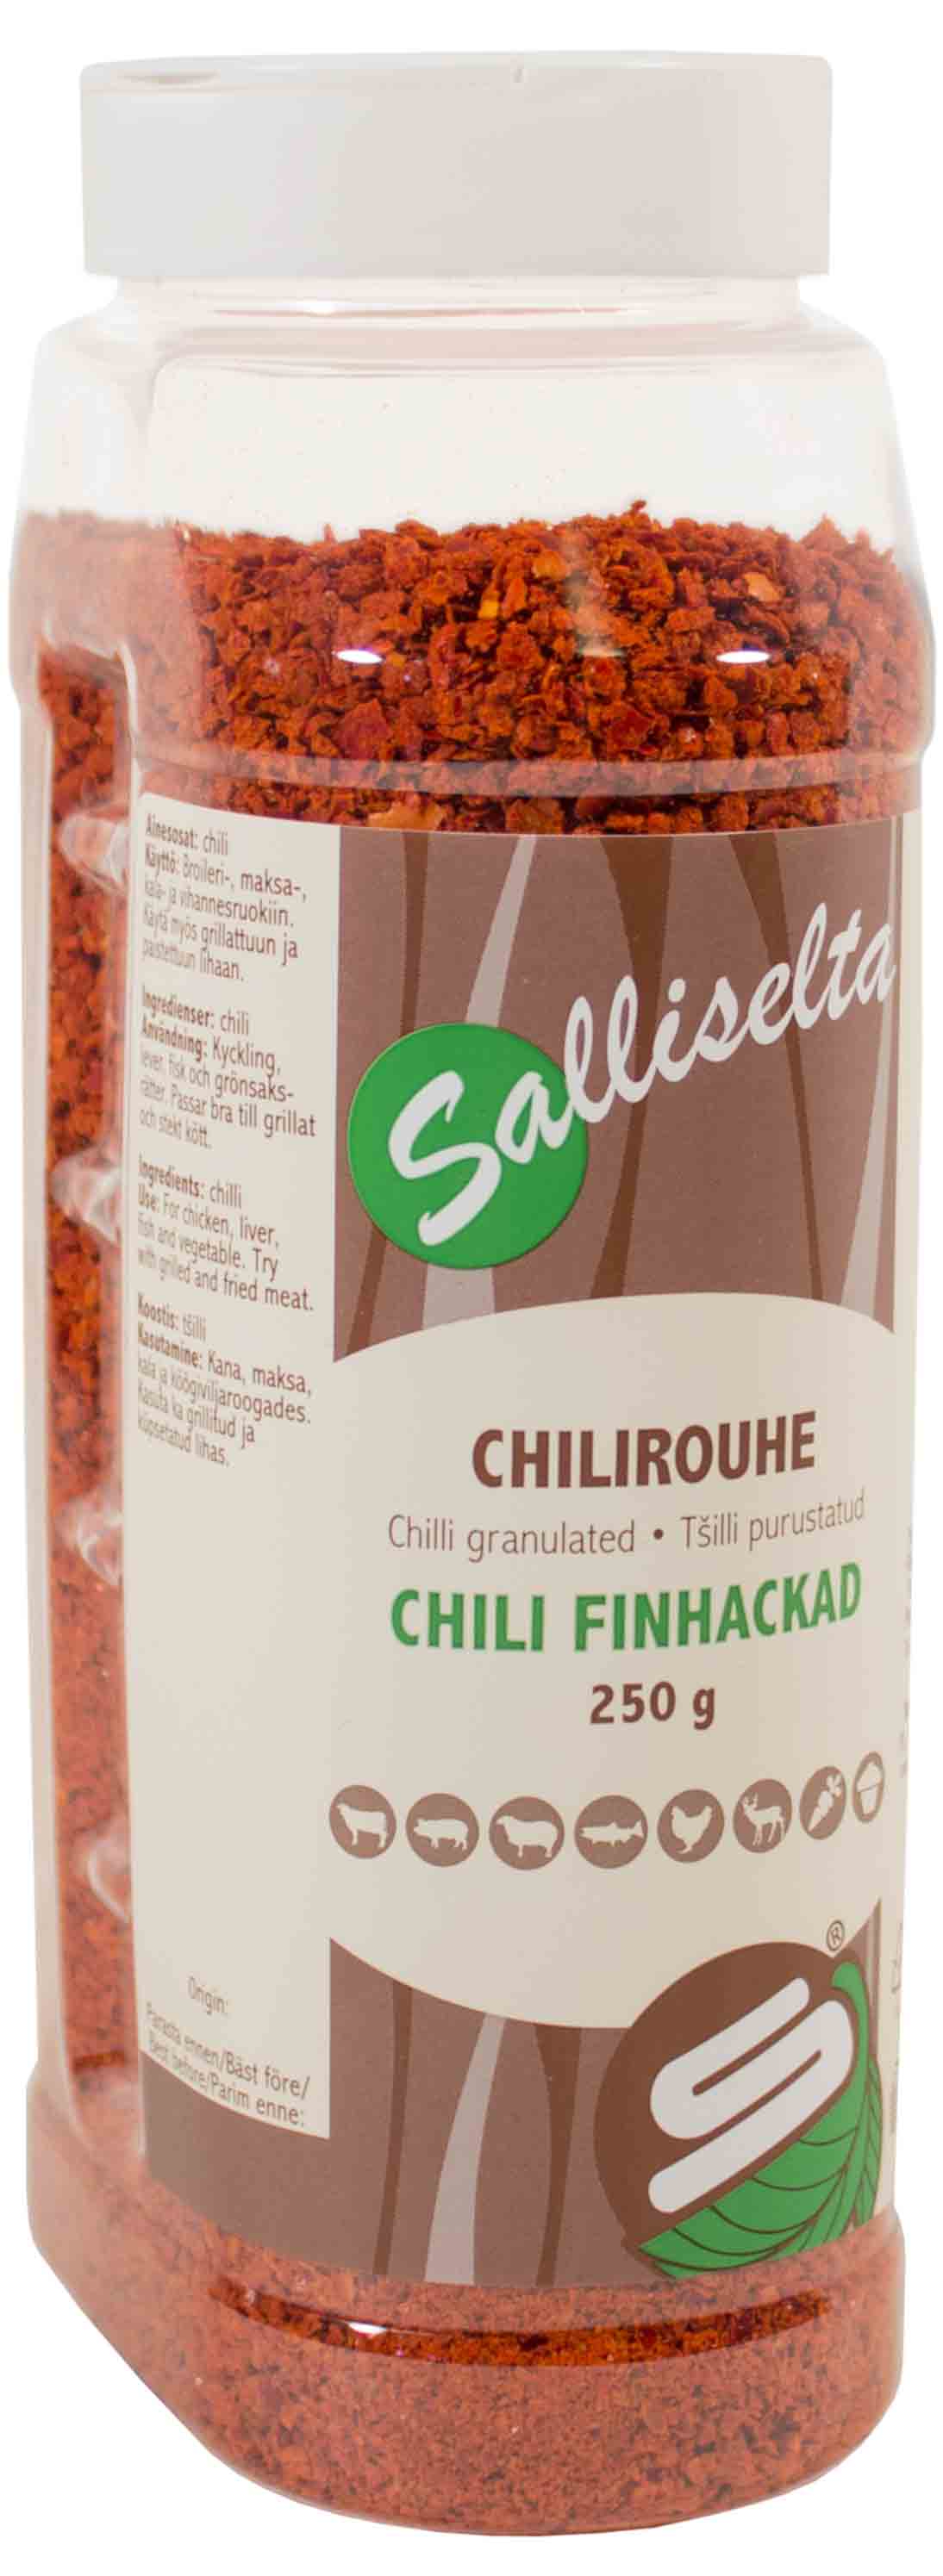 Chili finhackad 250 g